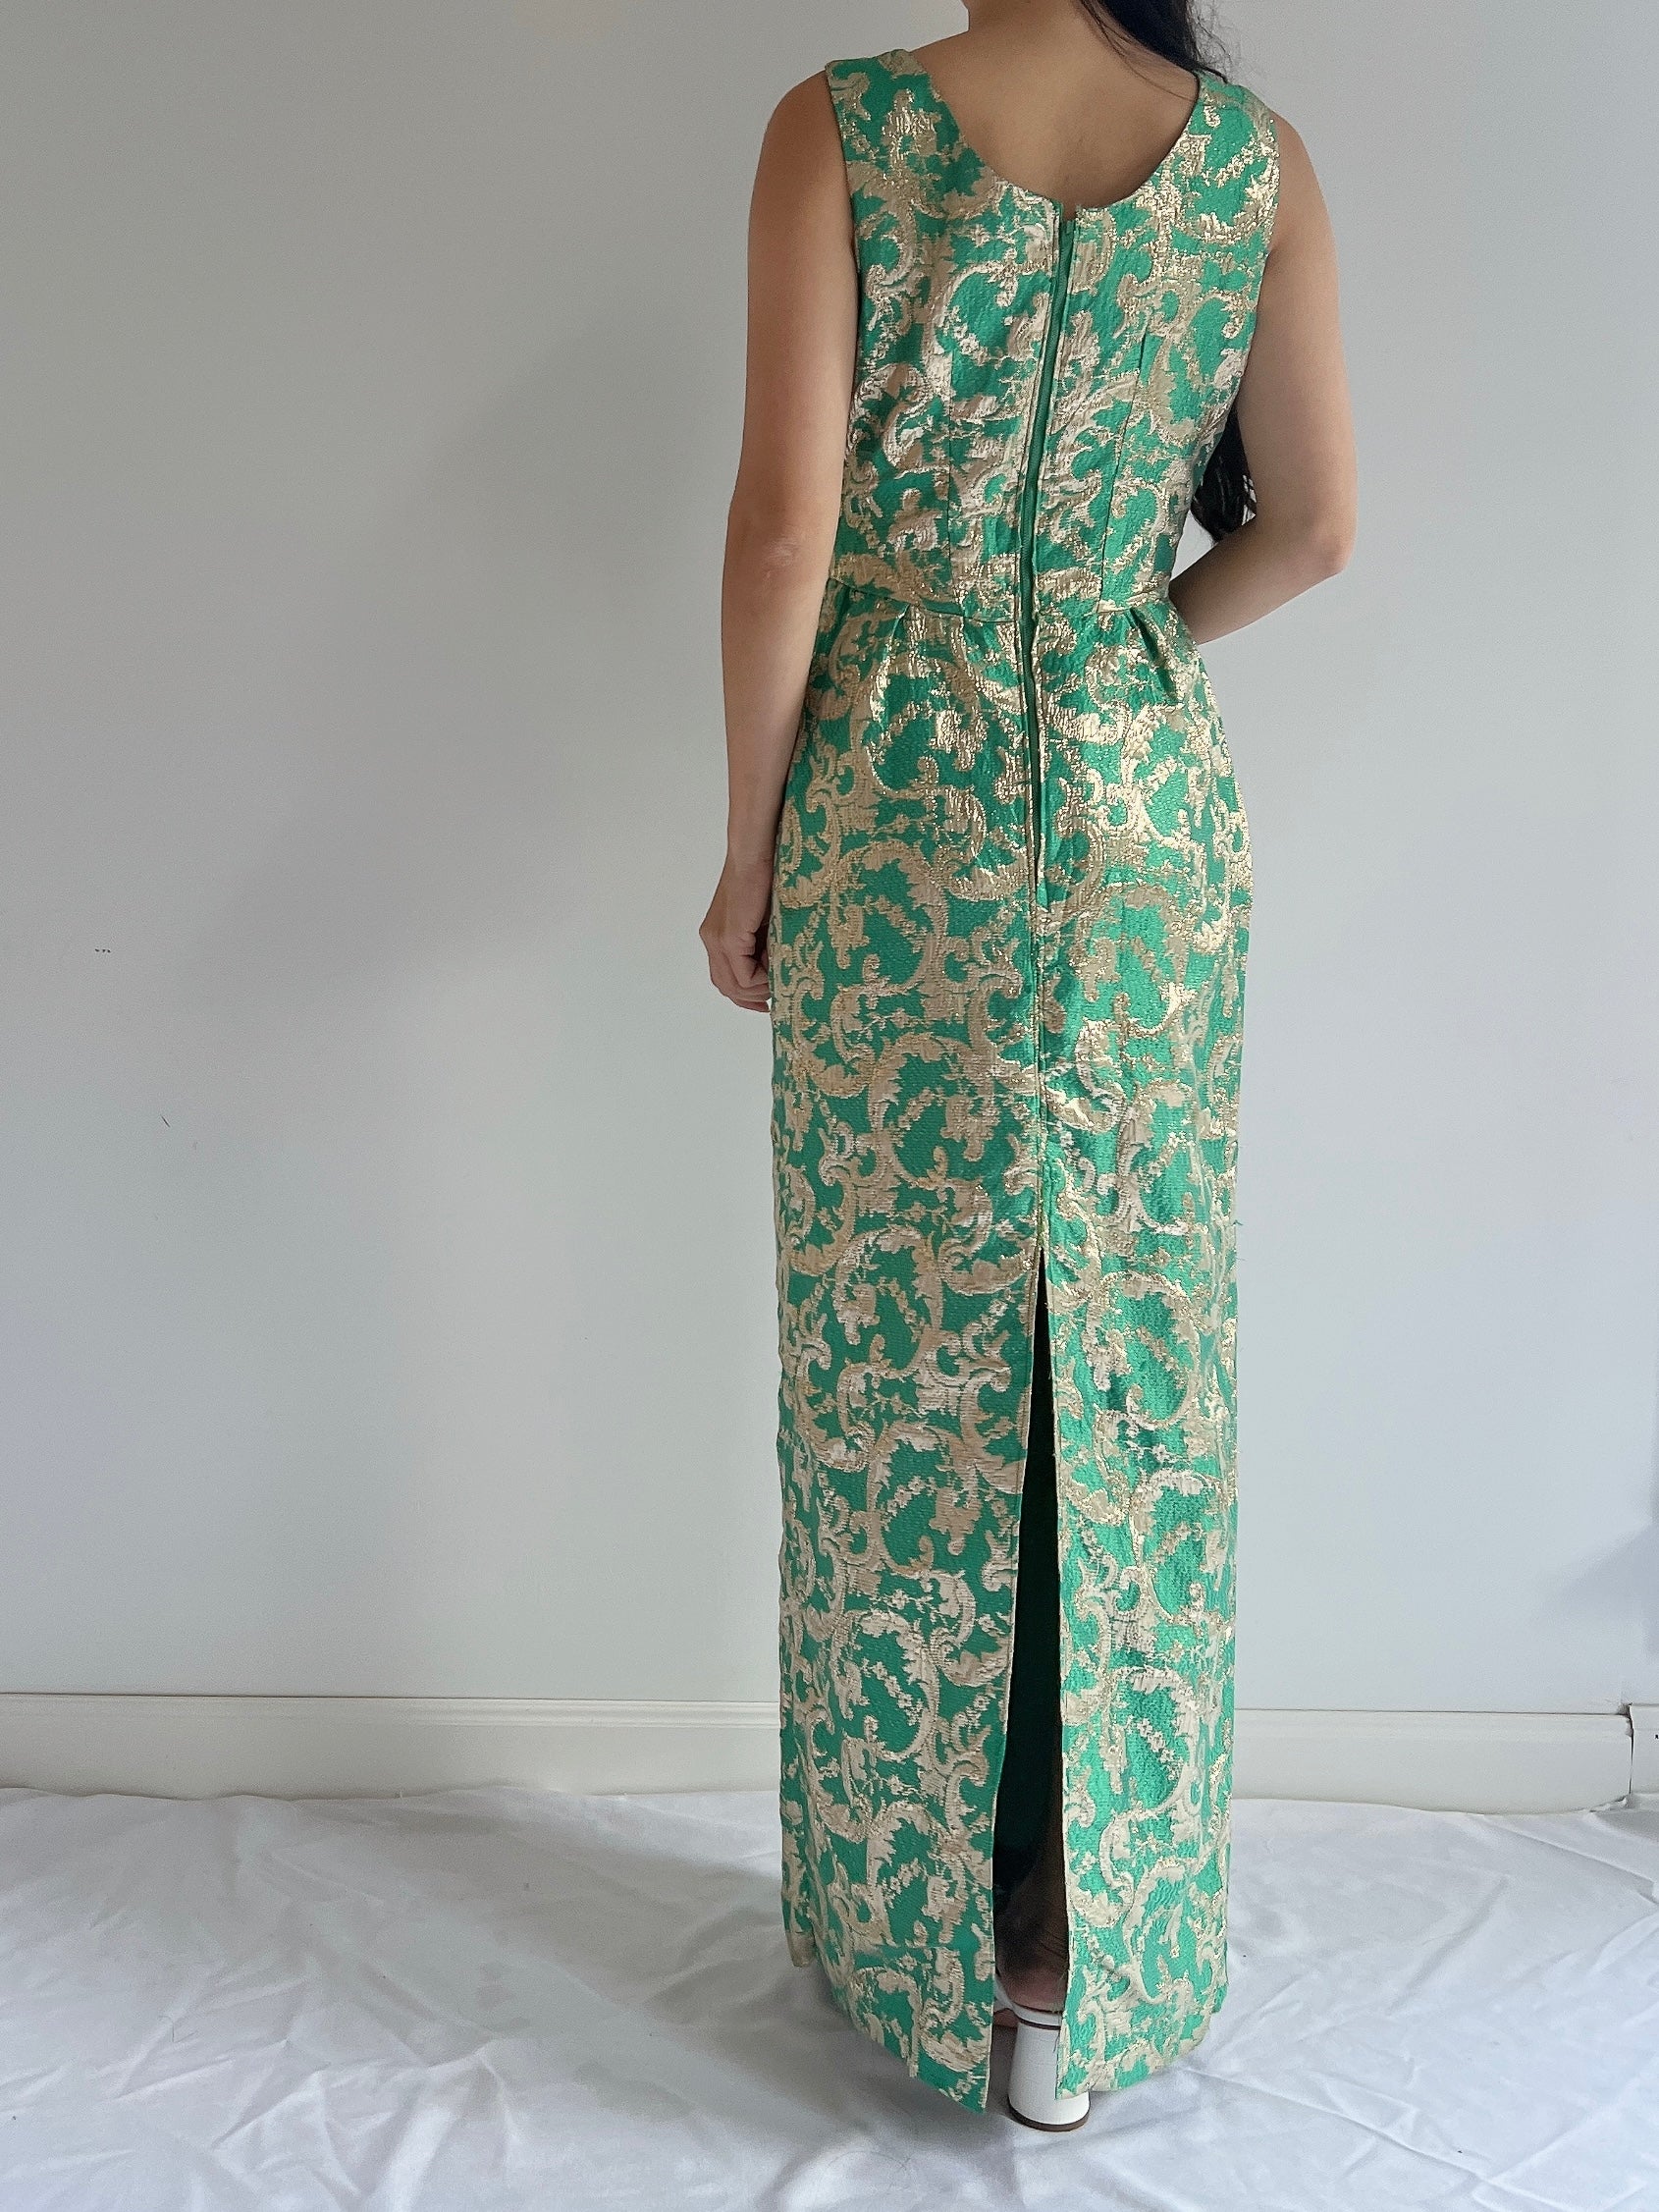 1960s Emerald Brocade Dress - S/M